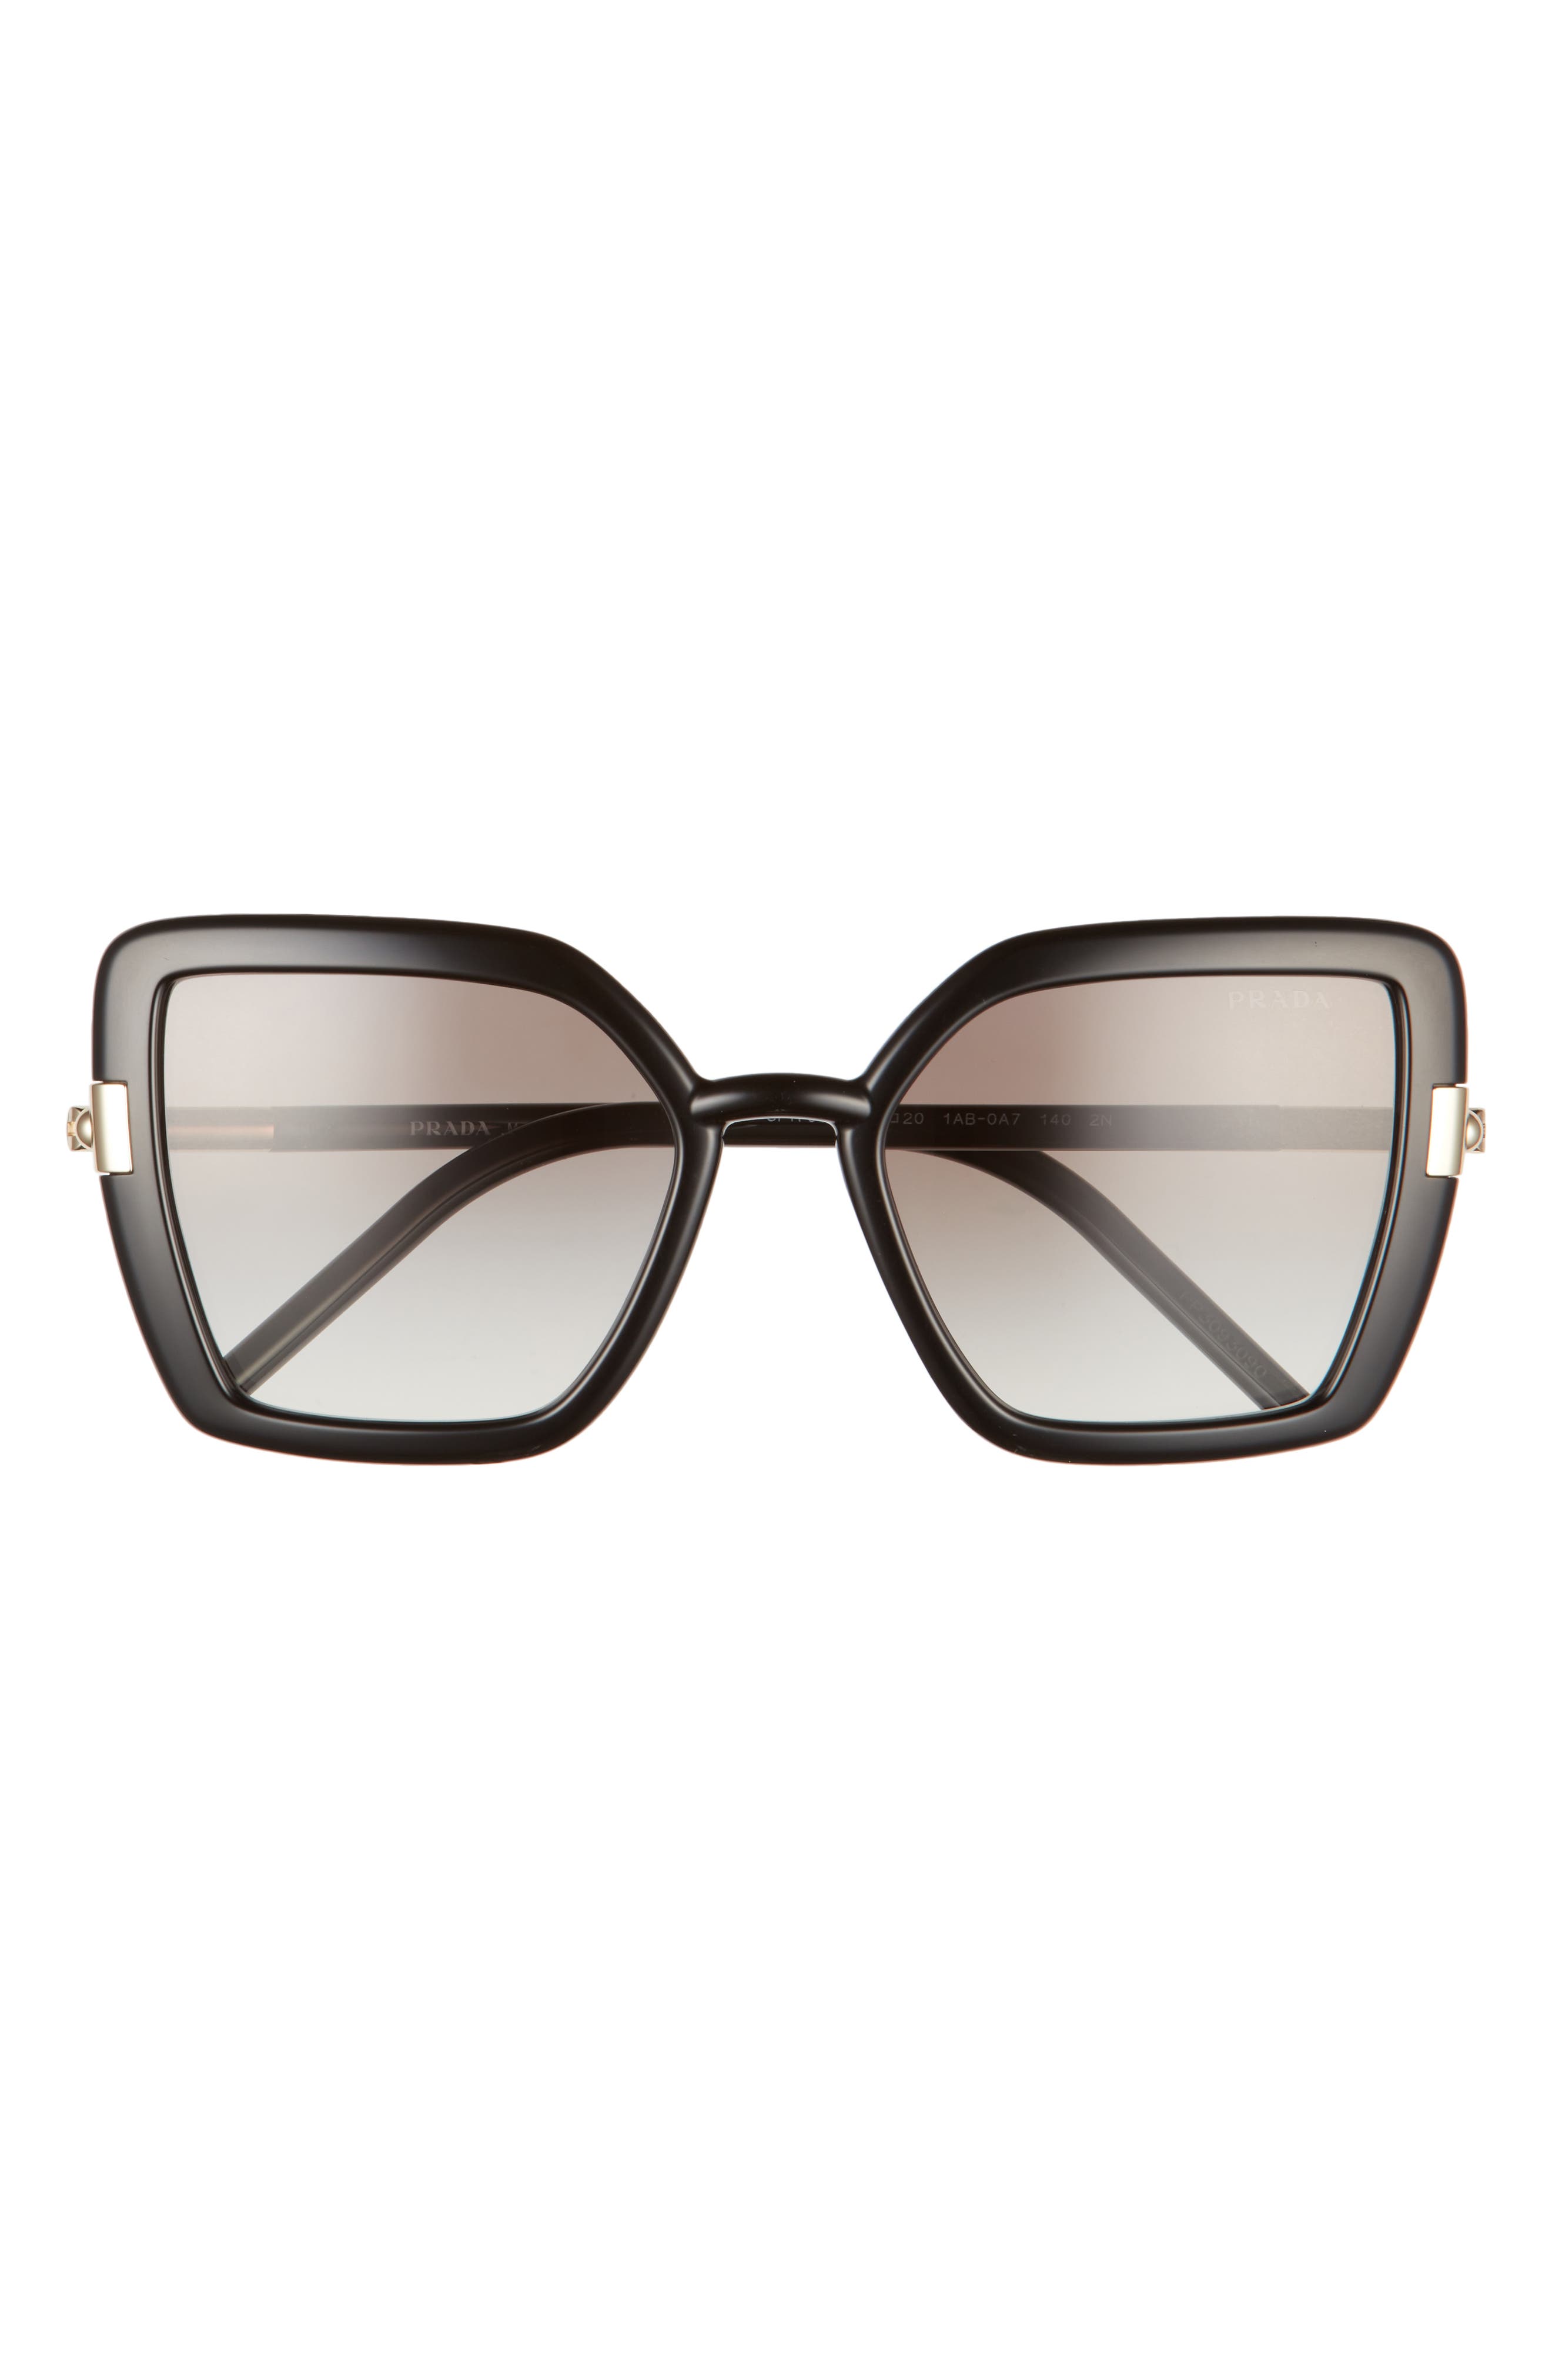 Prada 54mm Gradient Butterfly Sunglasses in Black/Grey Gradient at Nordstrom